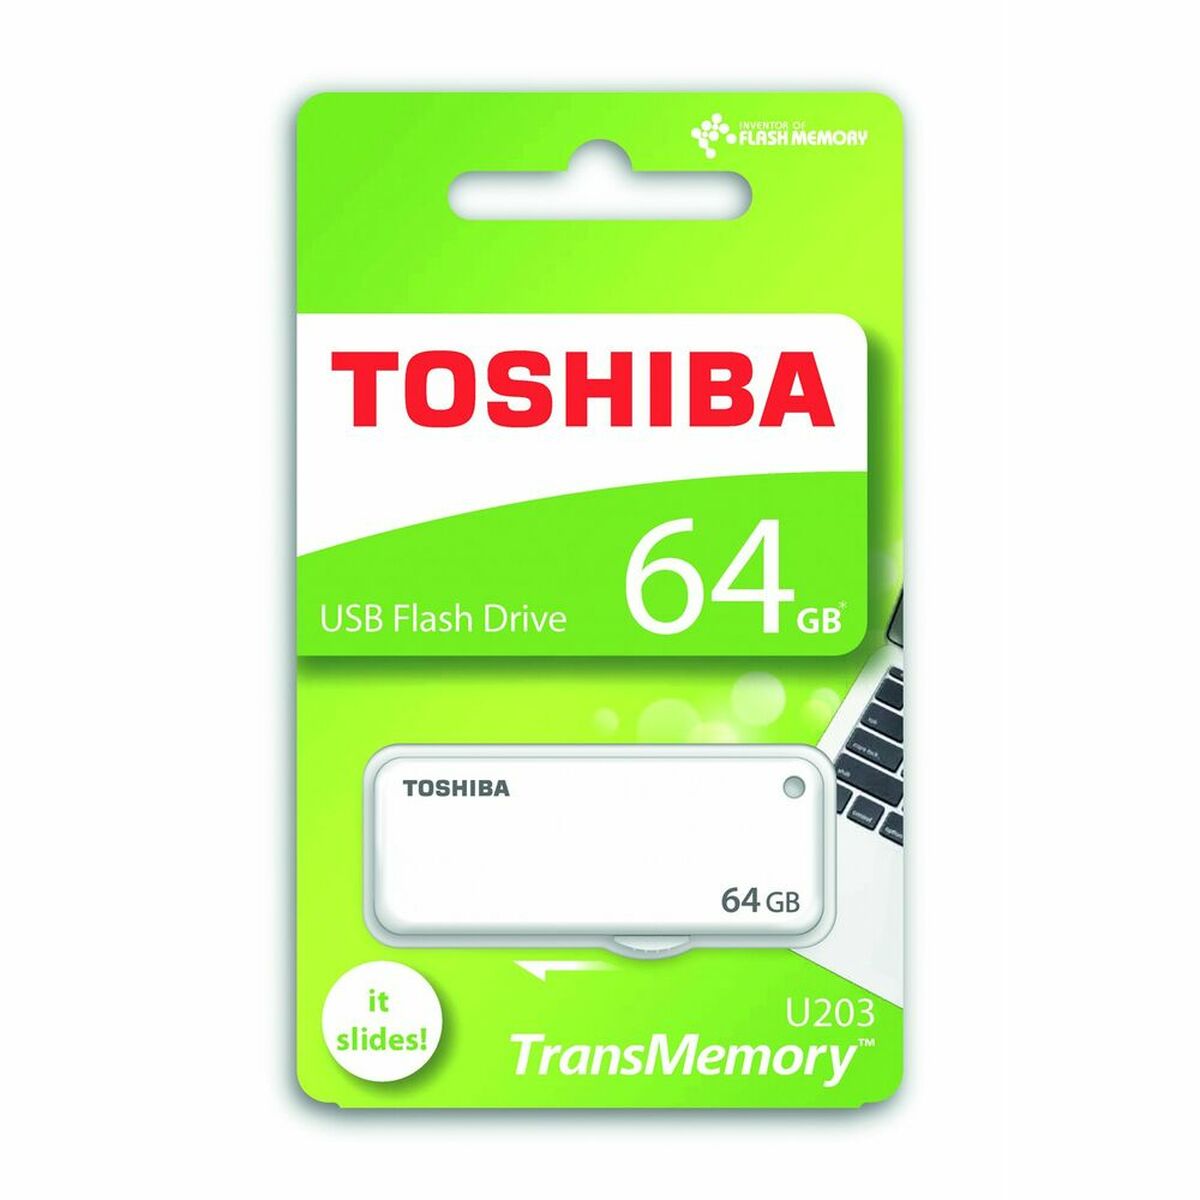 USB-pulk Toshiba U203 Valge 64 GB